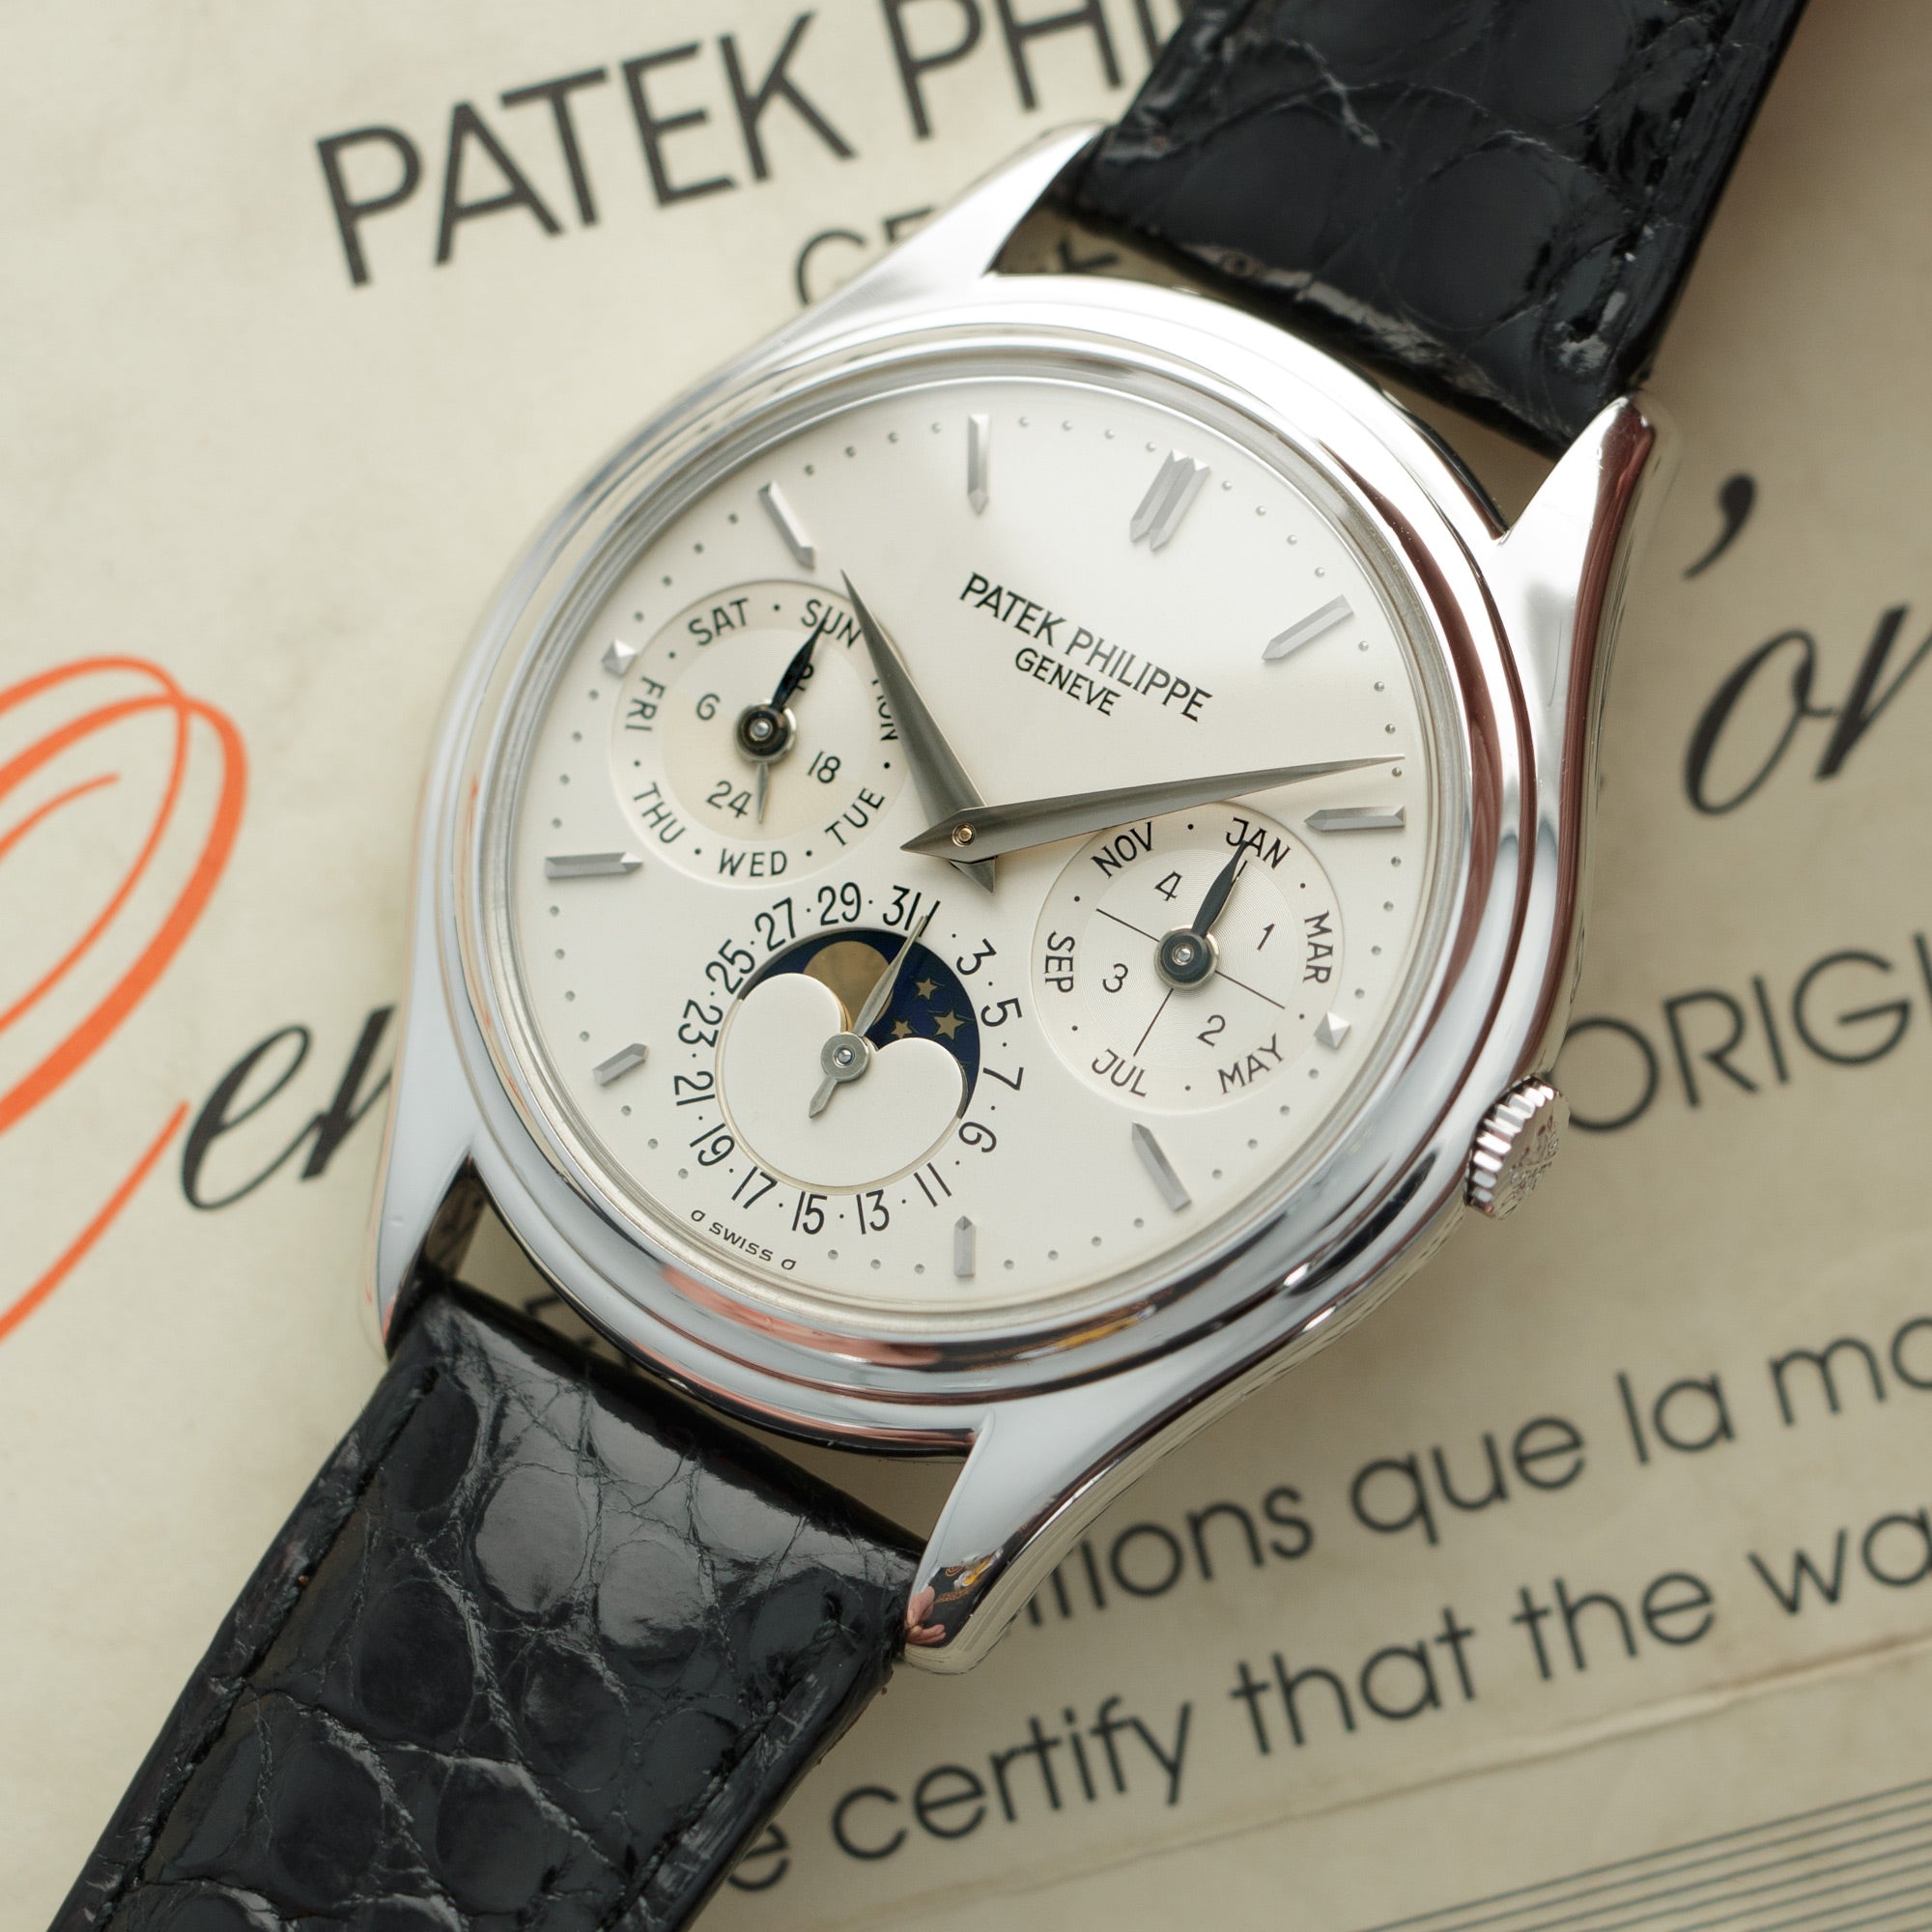 Patek Philippe - Patek Philippe Platinum Perpetual Calendar Ref. 3940P with Original Warranty Paper - The Keystone Watches